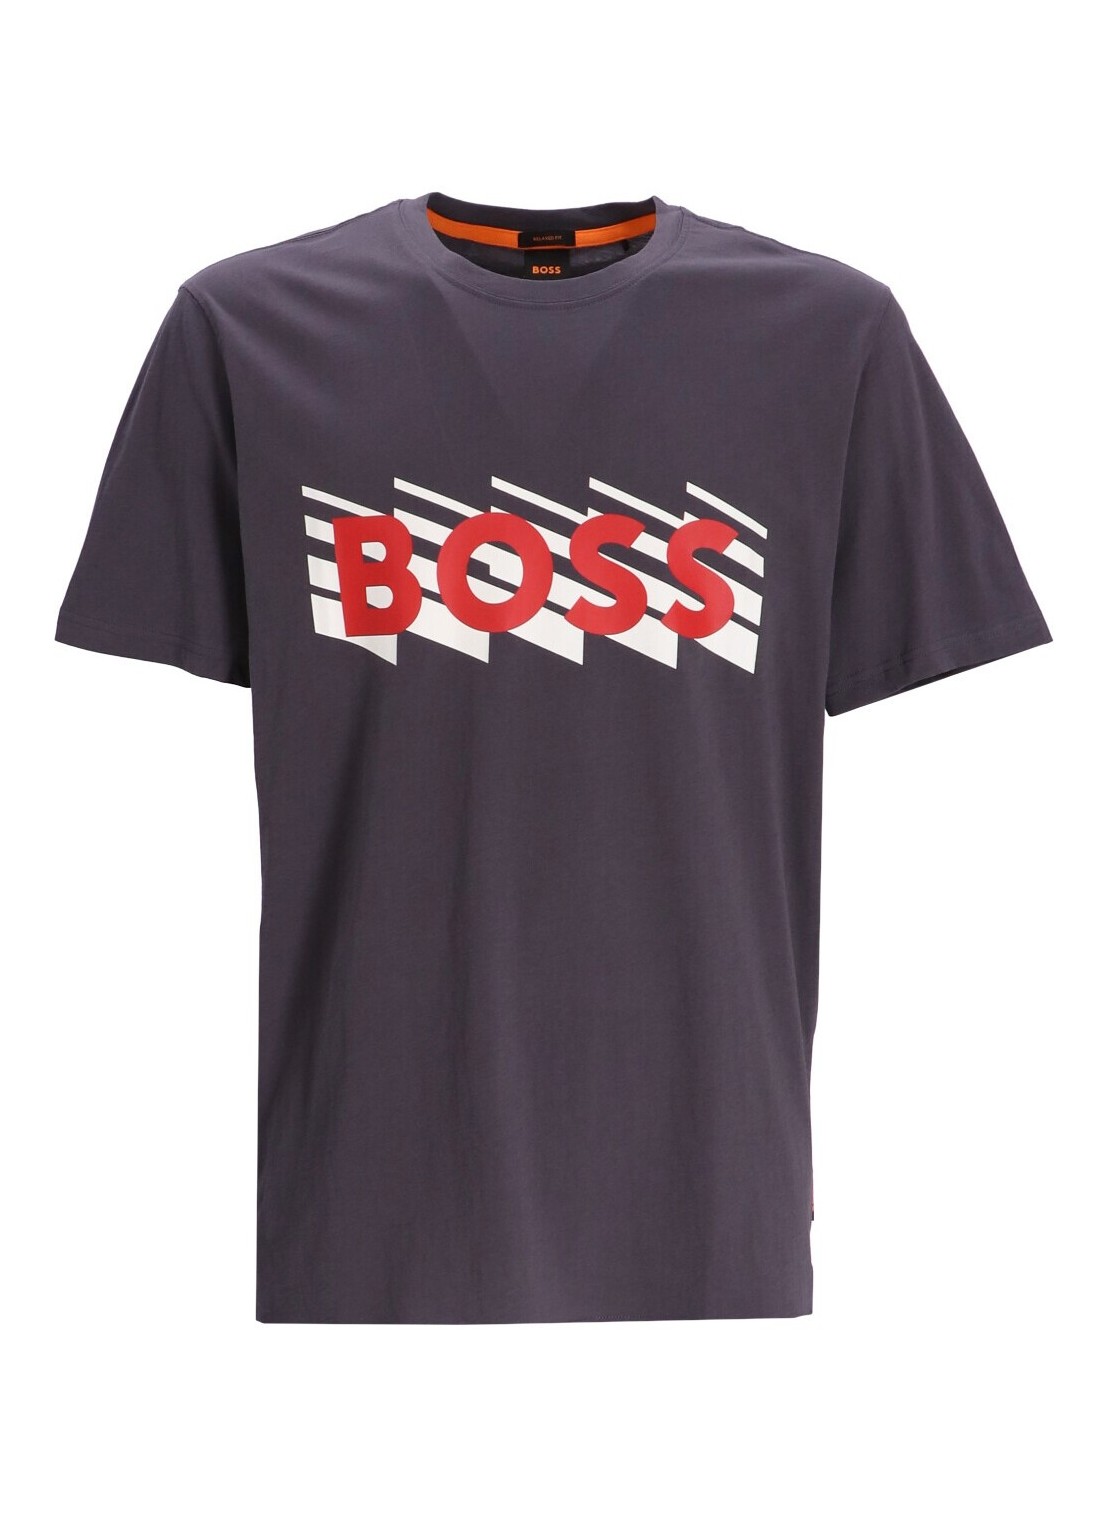 Camiseta boss t-shirt man teebossrete 50495719 022 talla L
 